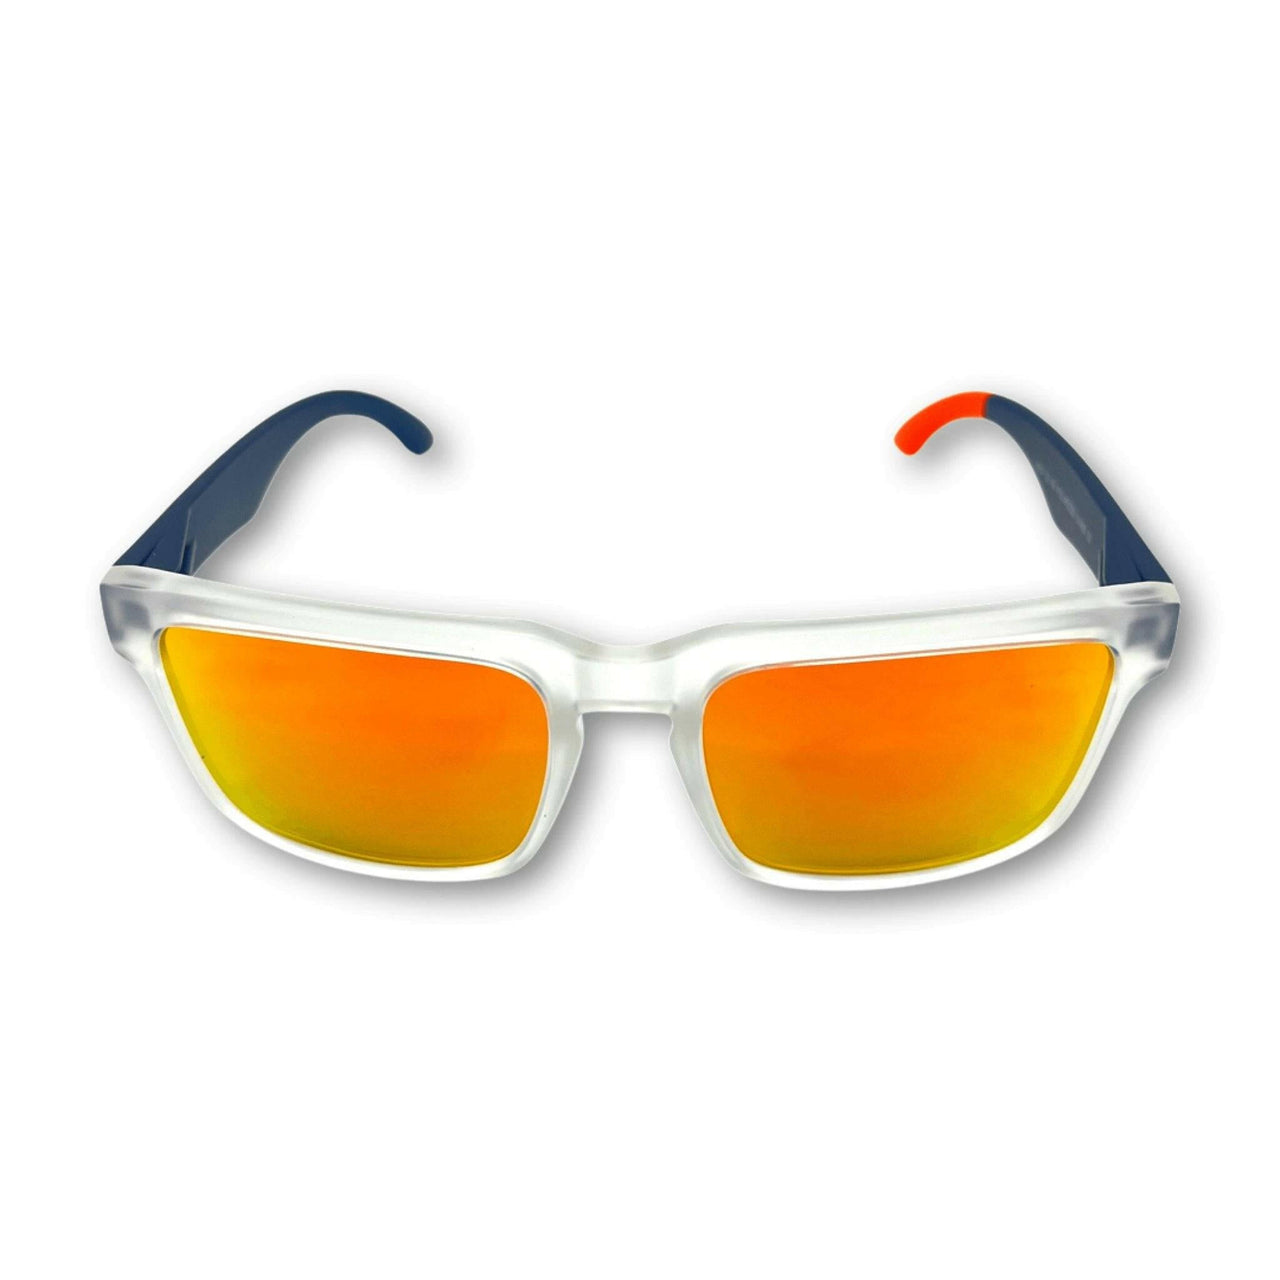 Hustler Orange Frosted Sunglasses